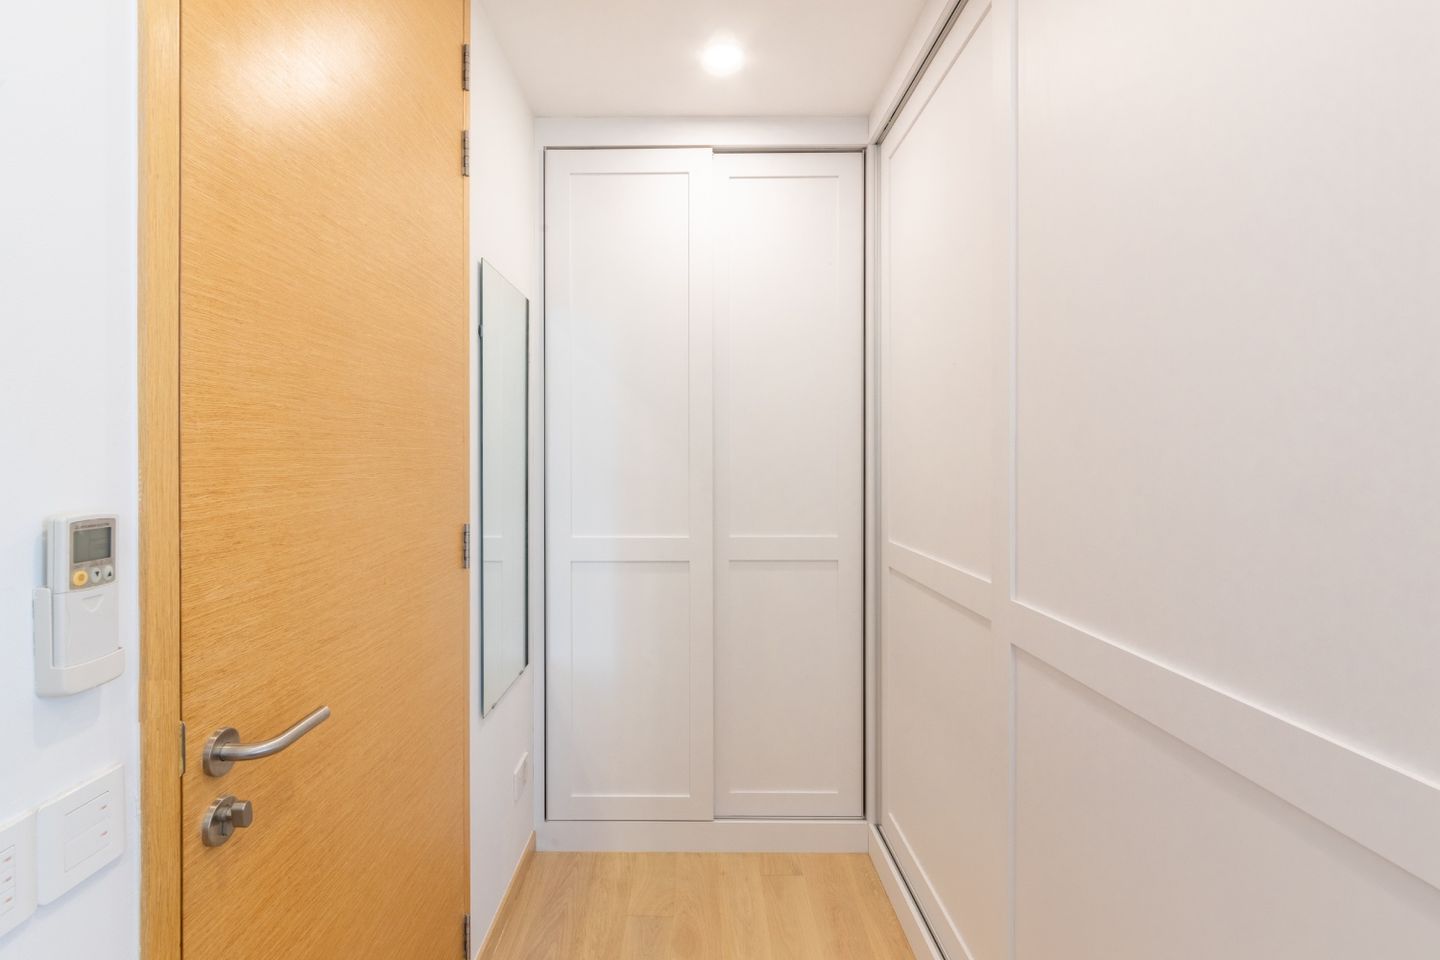 Classical 4-Door White Wardrobe Design